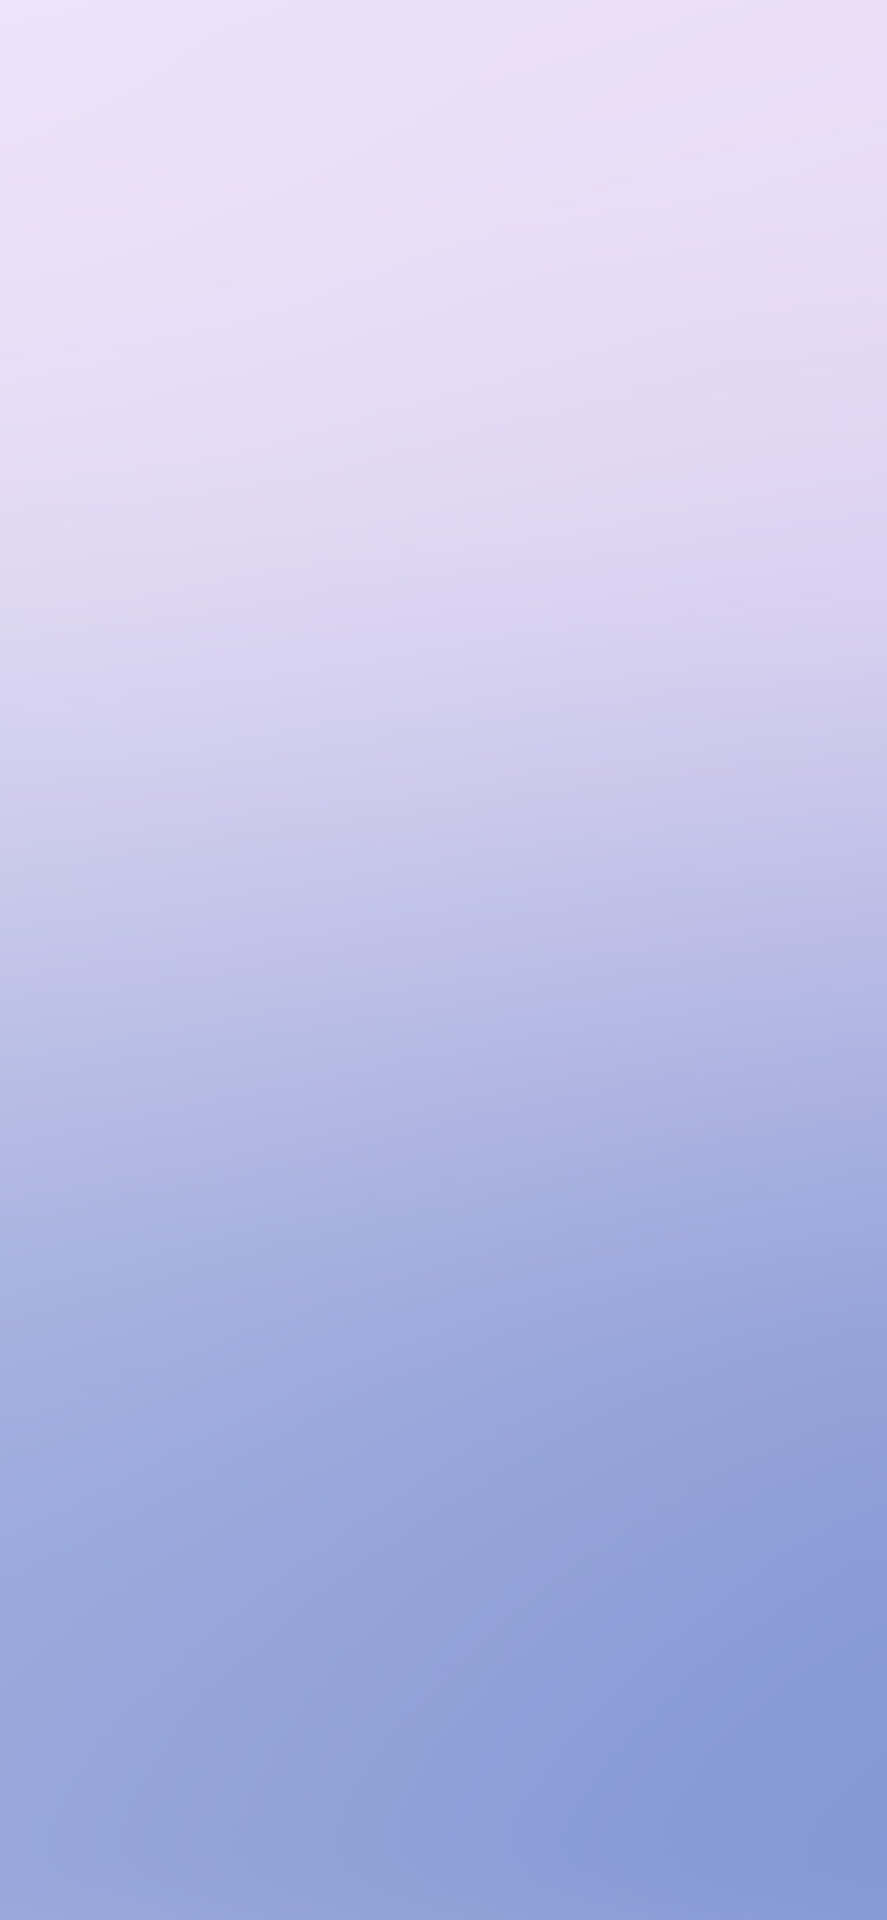 Caption: A Gentle Blush Of Lavender - Image Of A Soft Light Purple Background